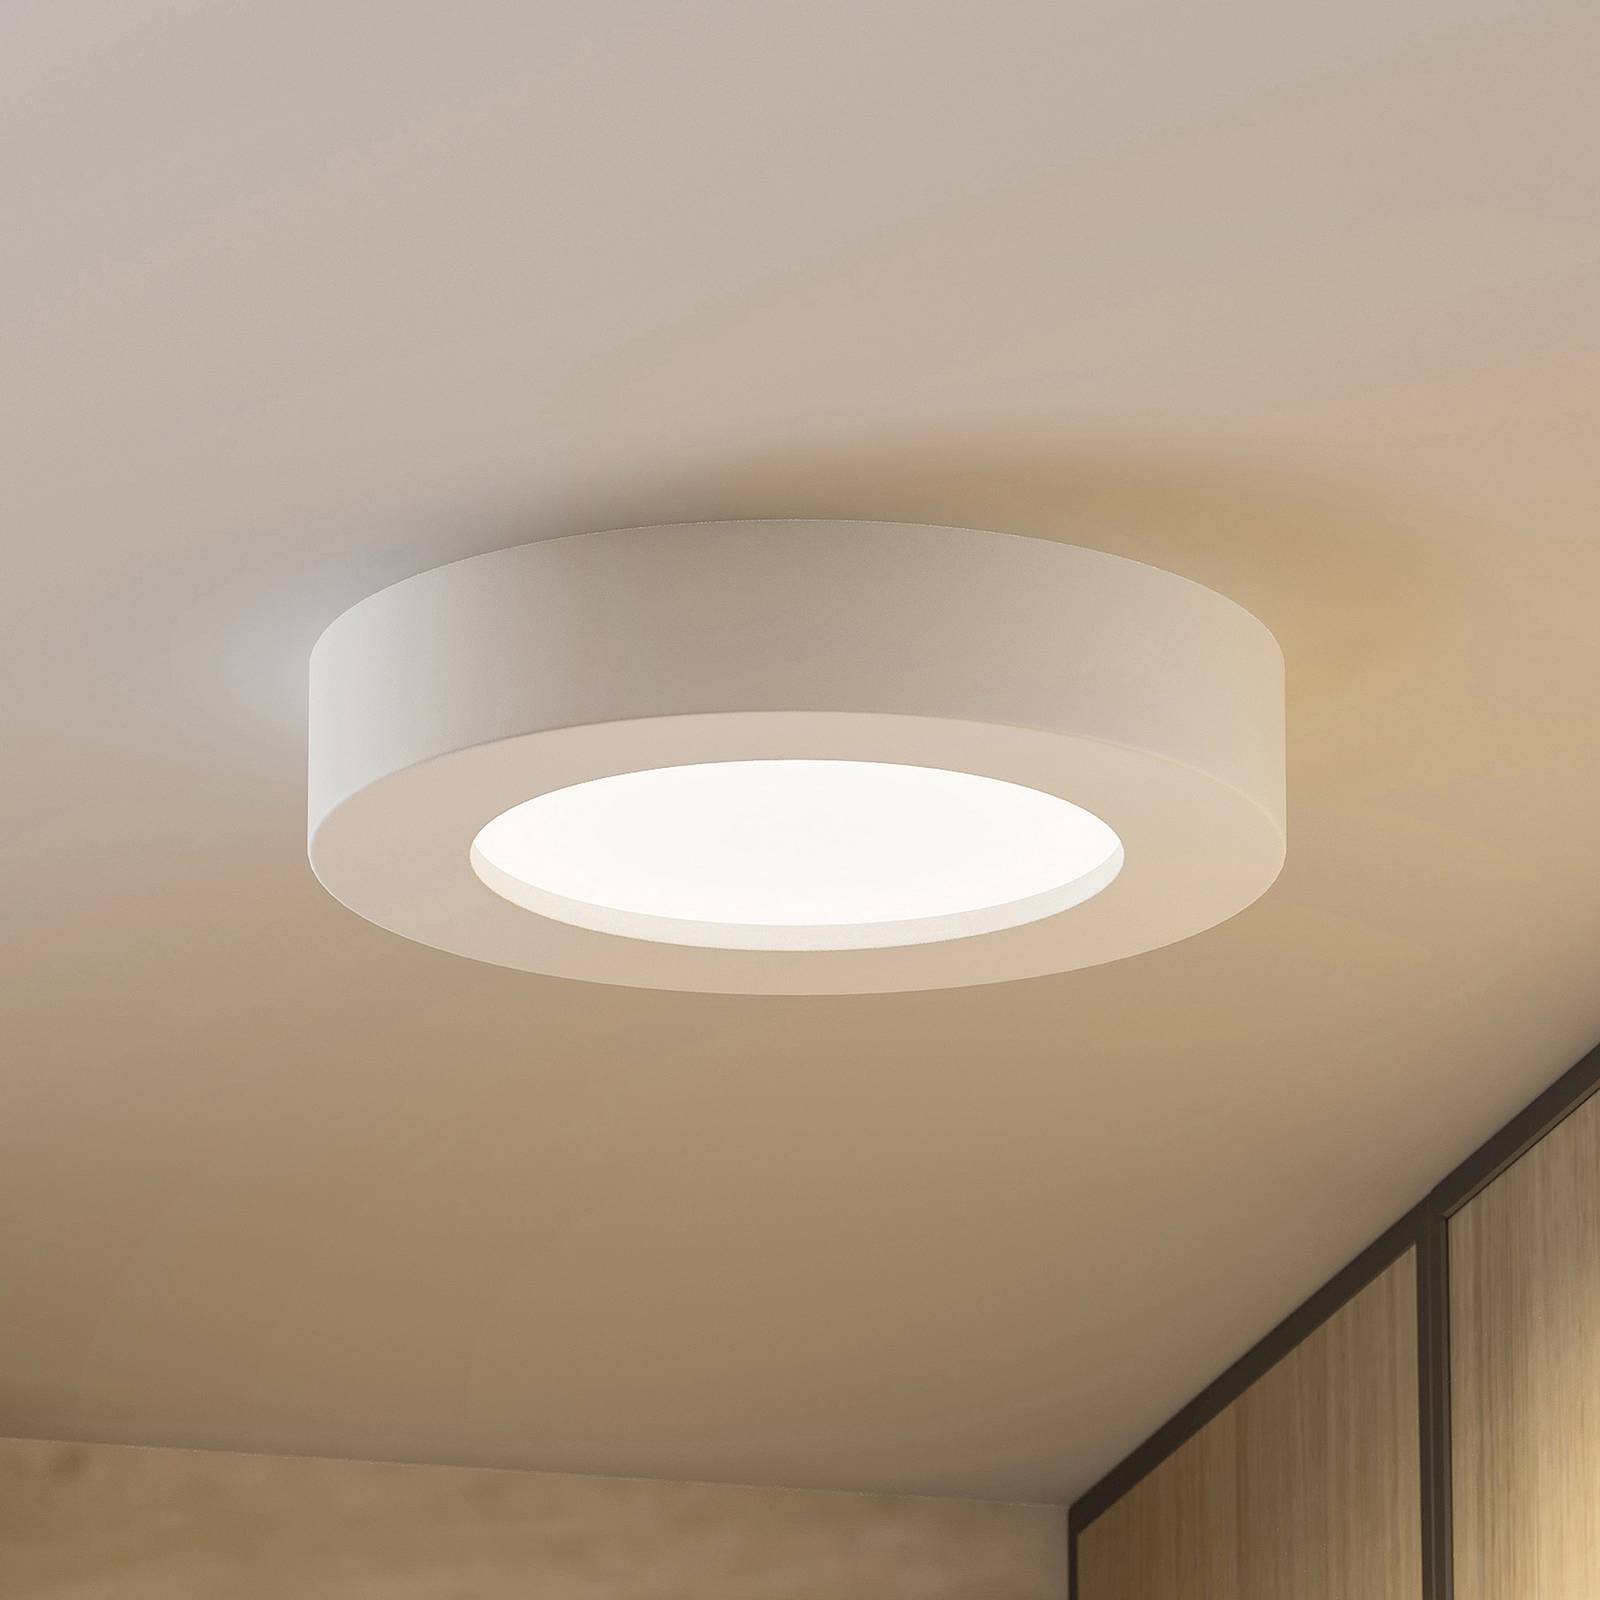 Image of Prios Edwina plafonnier LED, blanc, 17,7 cm 4251911706932